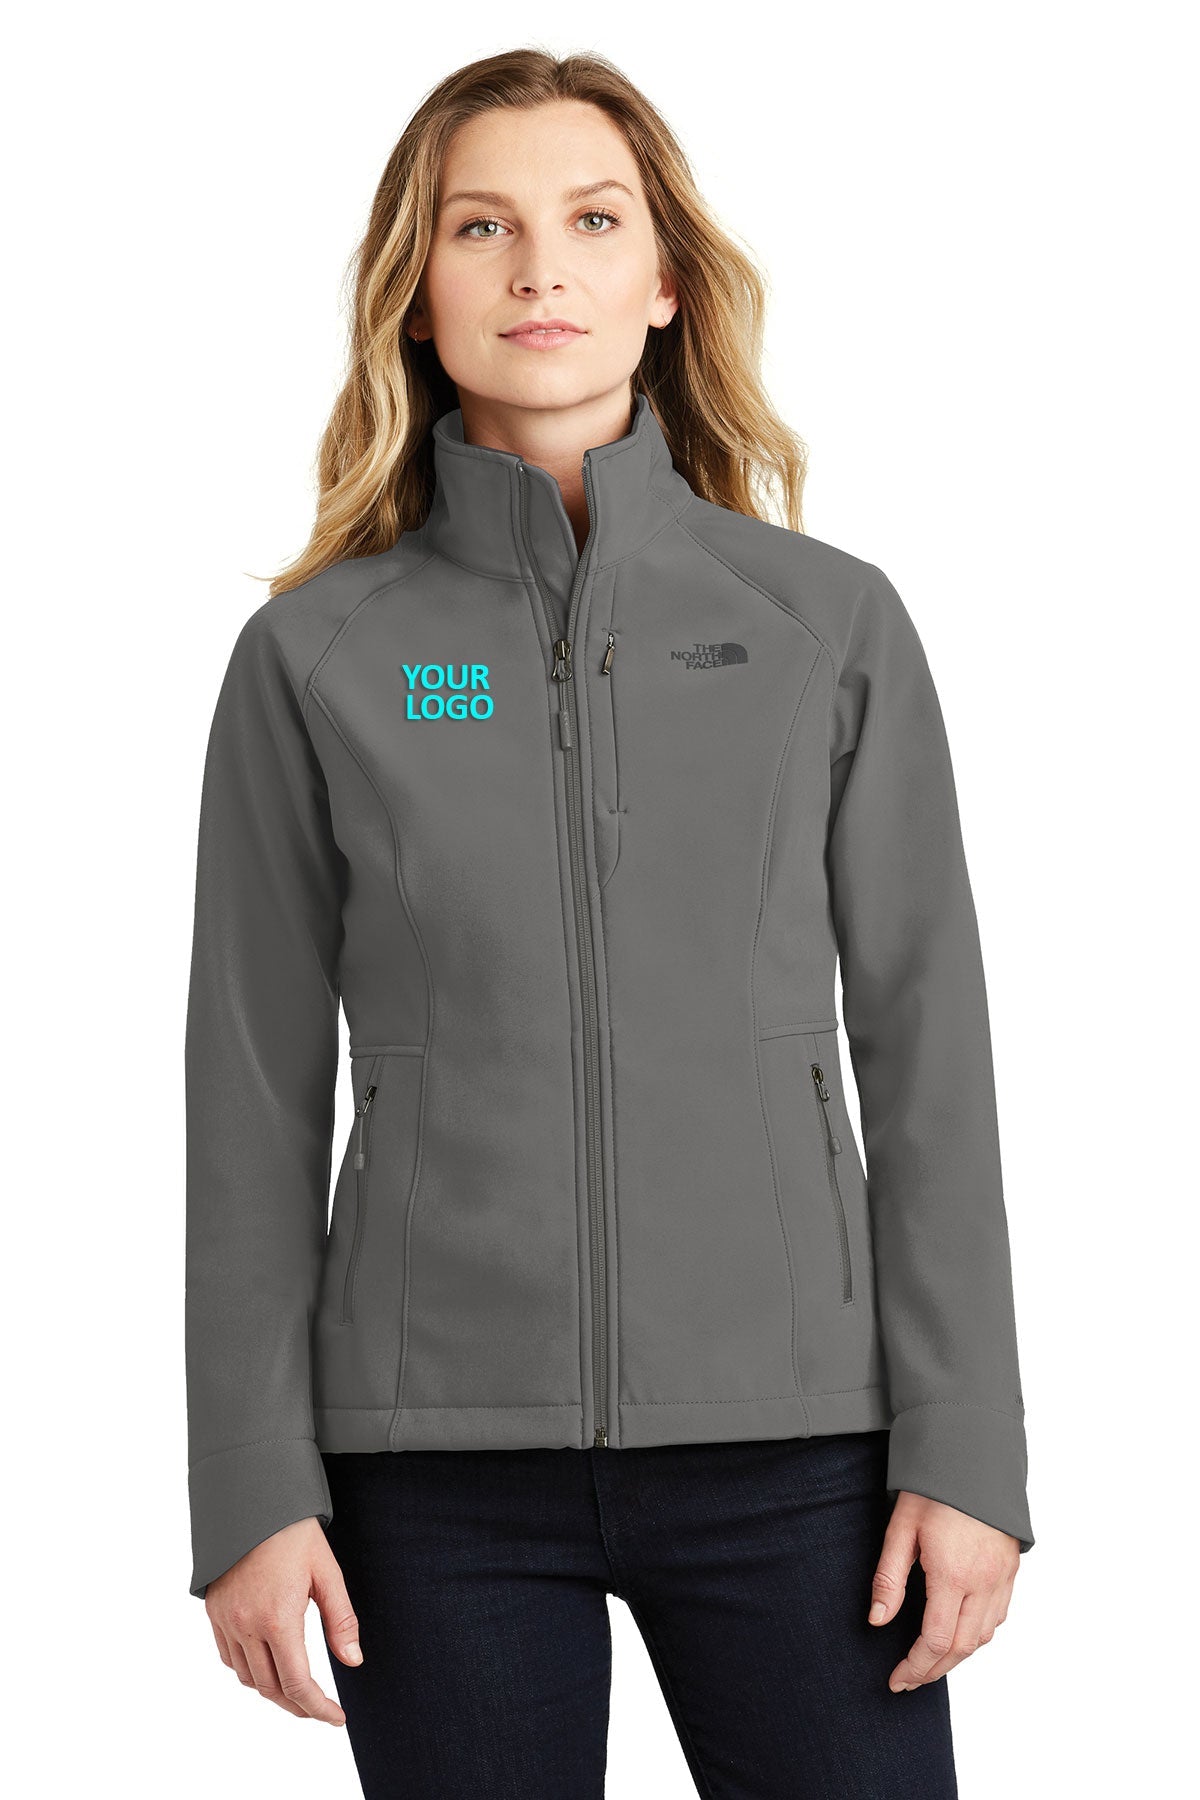 The North Face Asphalt Grey NF0A3LGU business jackets with logo